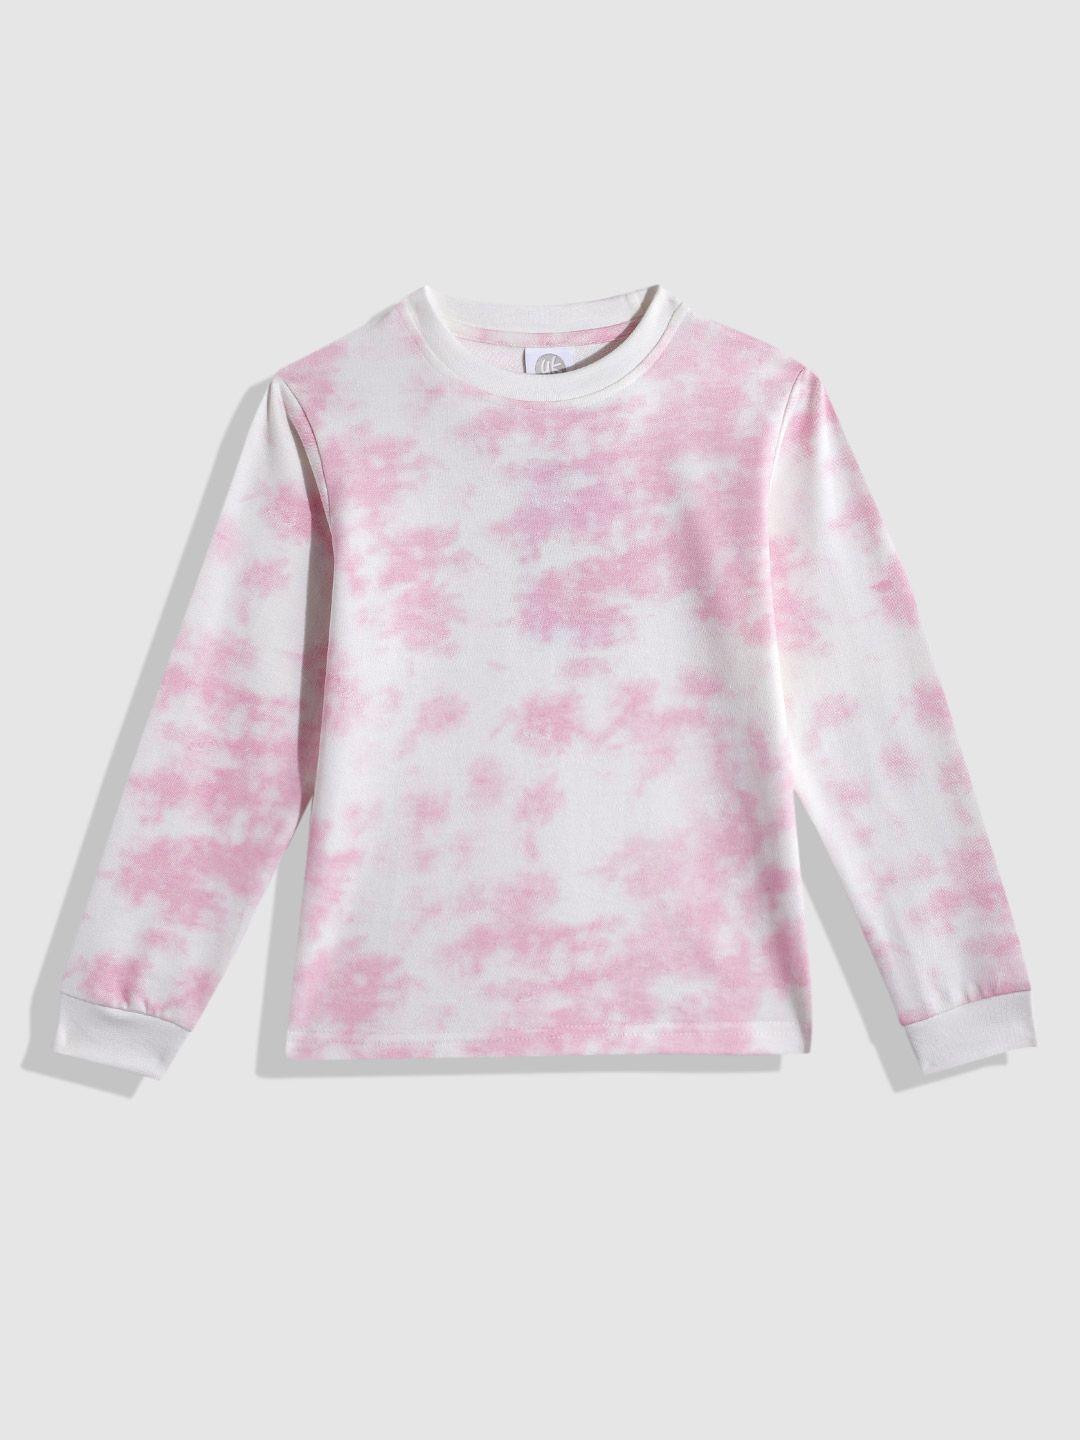 yk unisex kids abstract printed pure cotton sweatshirt